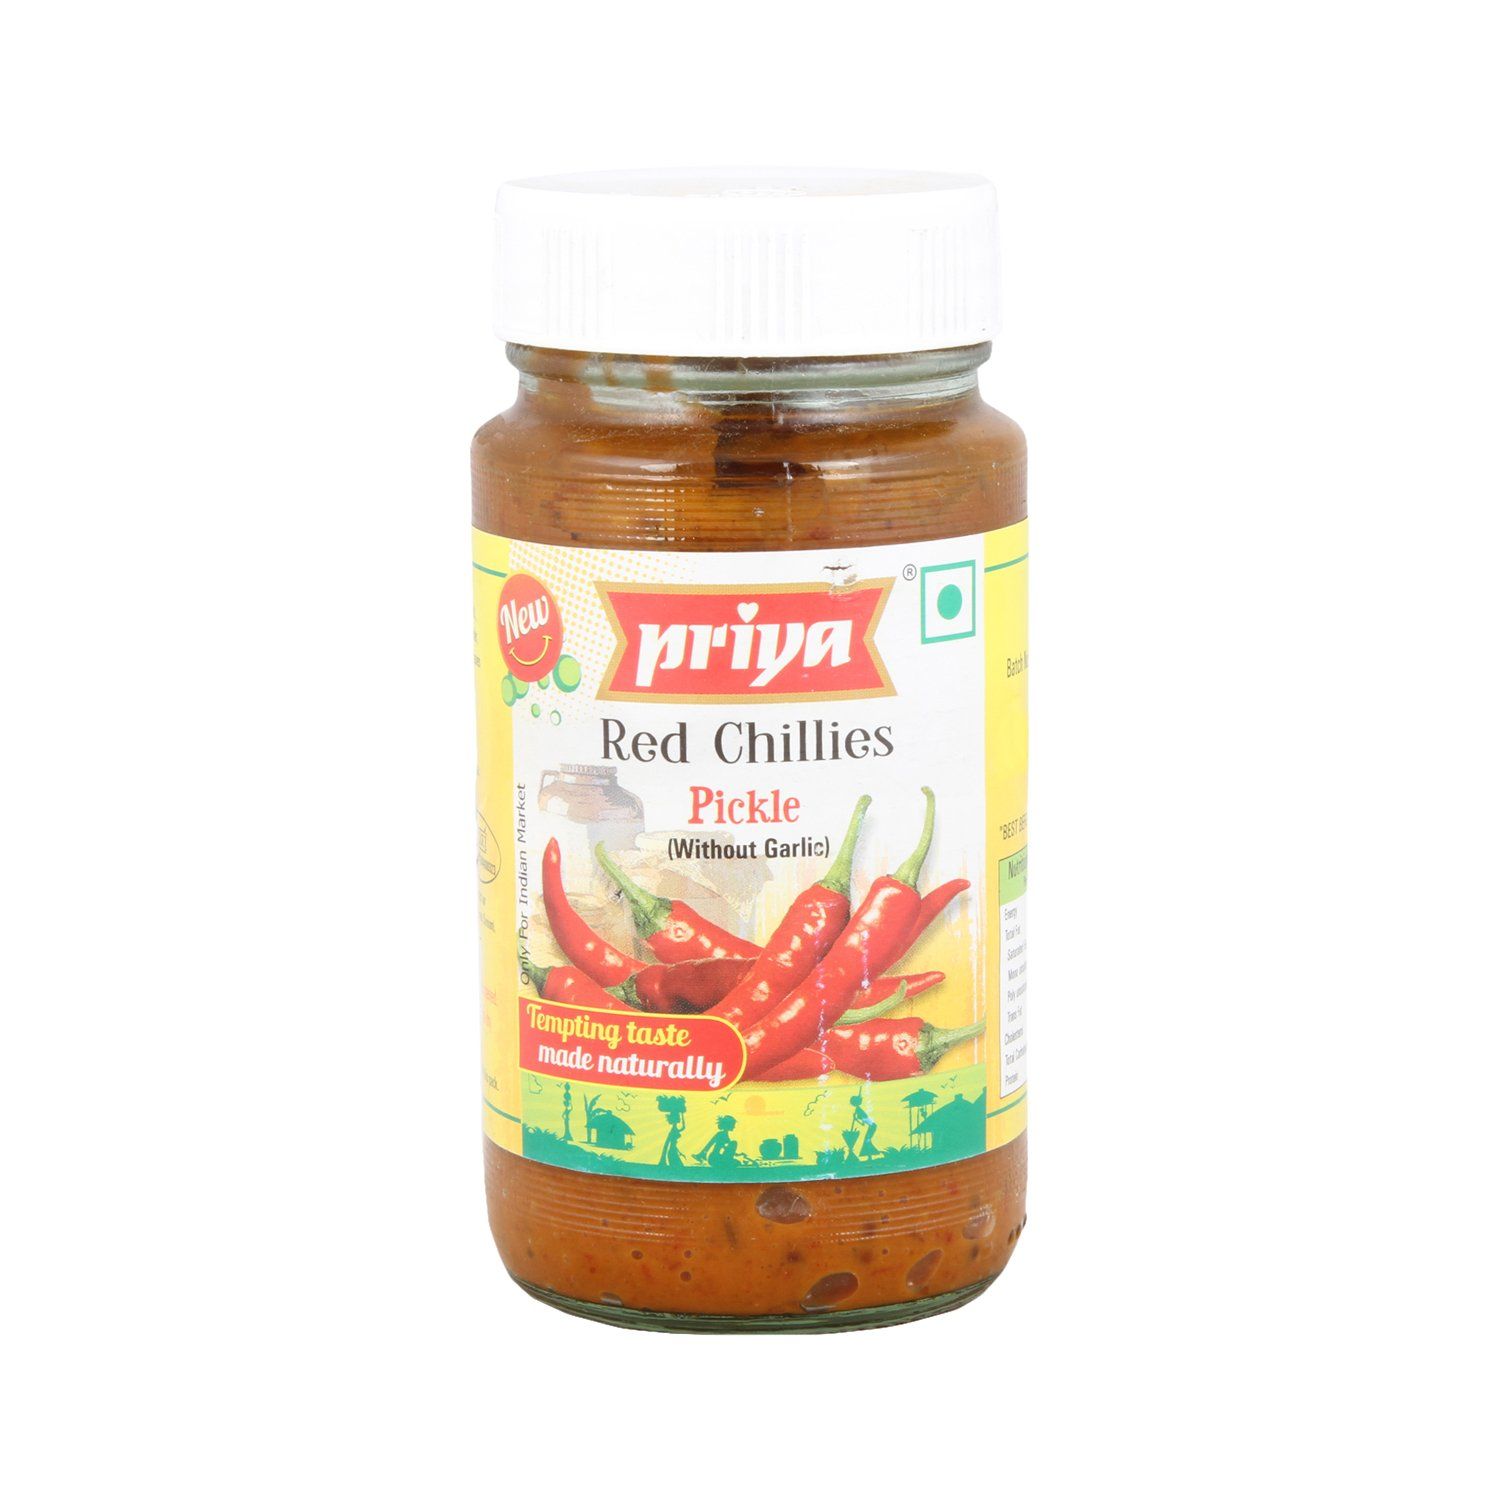 Priya Red Chillies Pickle Without Garlic Image